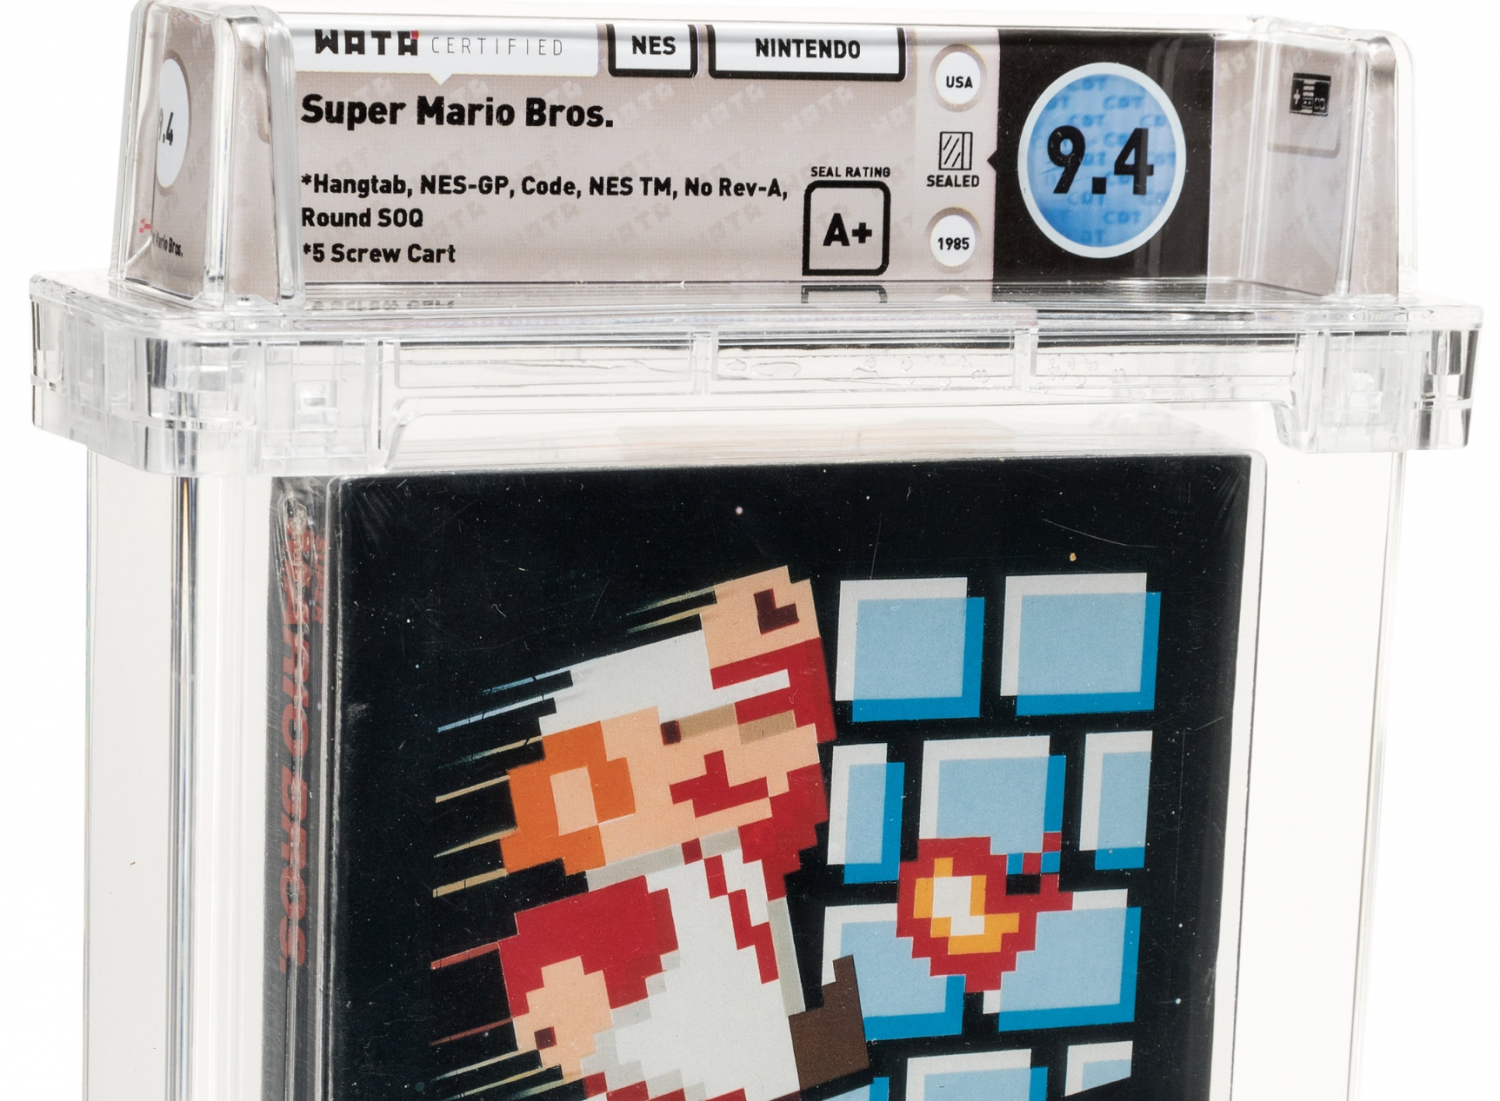 Mint 9.4 grade Super Mario Bros. NES game sells for $114,000 | TweakTown